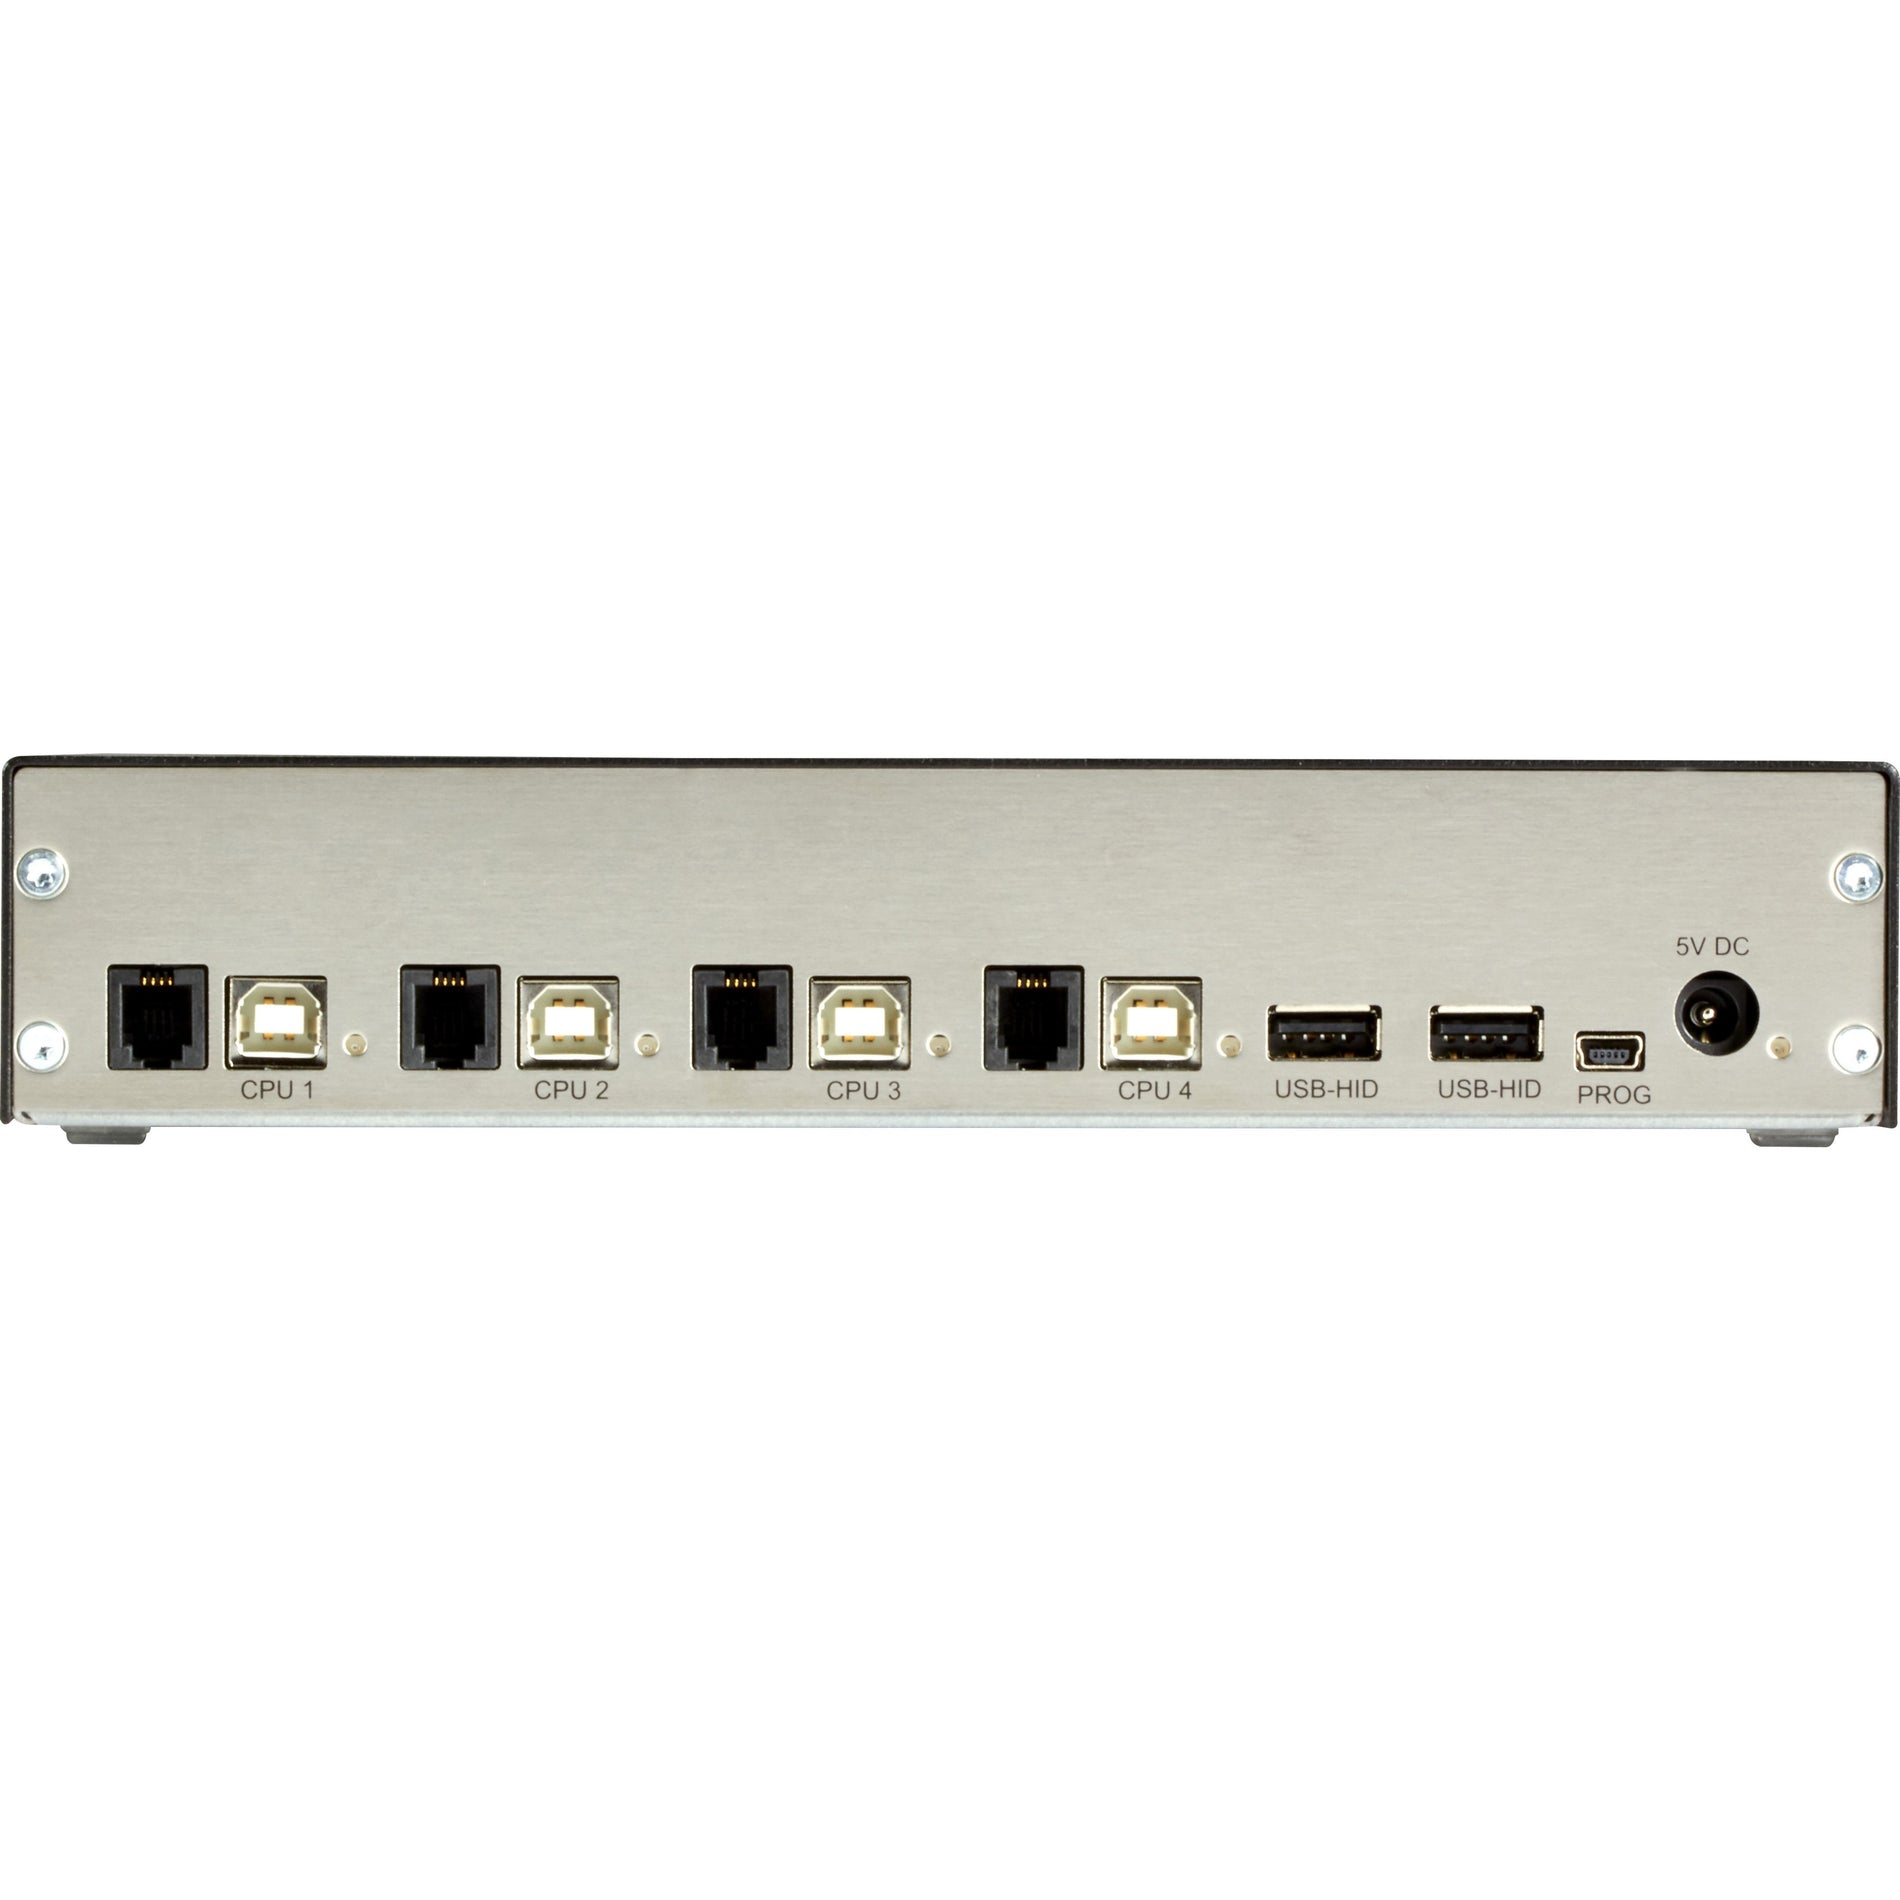 Black Box ACX1004A-HID2 TC Series KM Desktop Switch - 4-Port, (2) HID, USB, Network (RJ-45), 2 Year Warranty